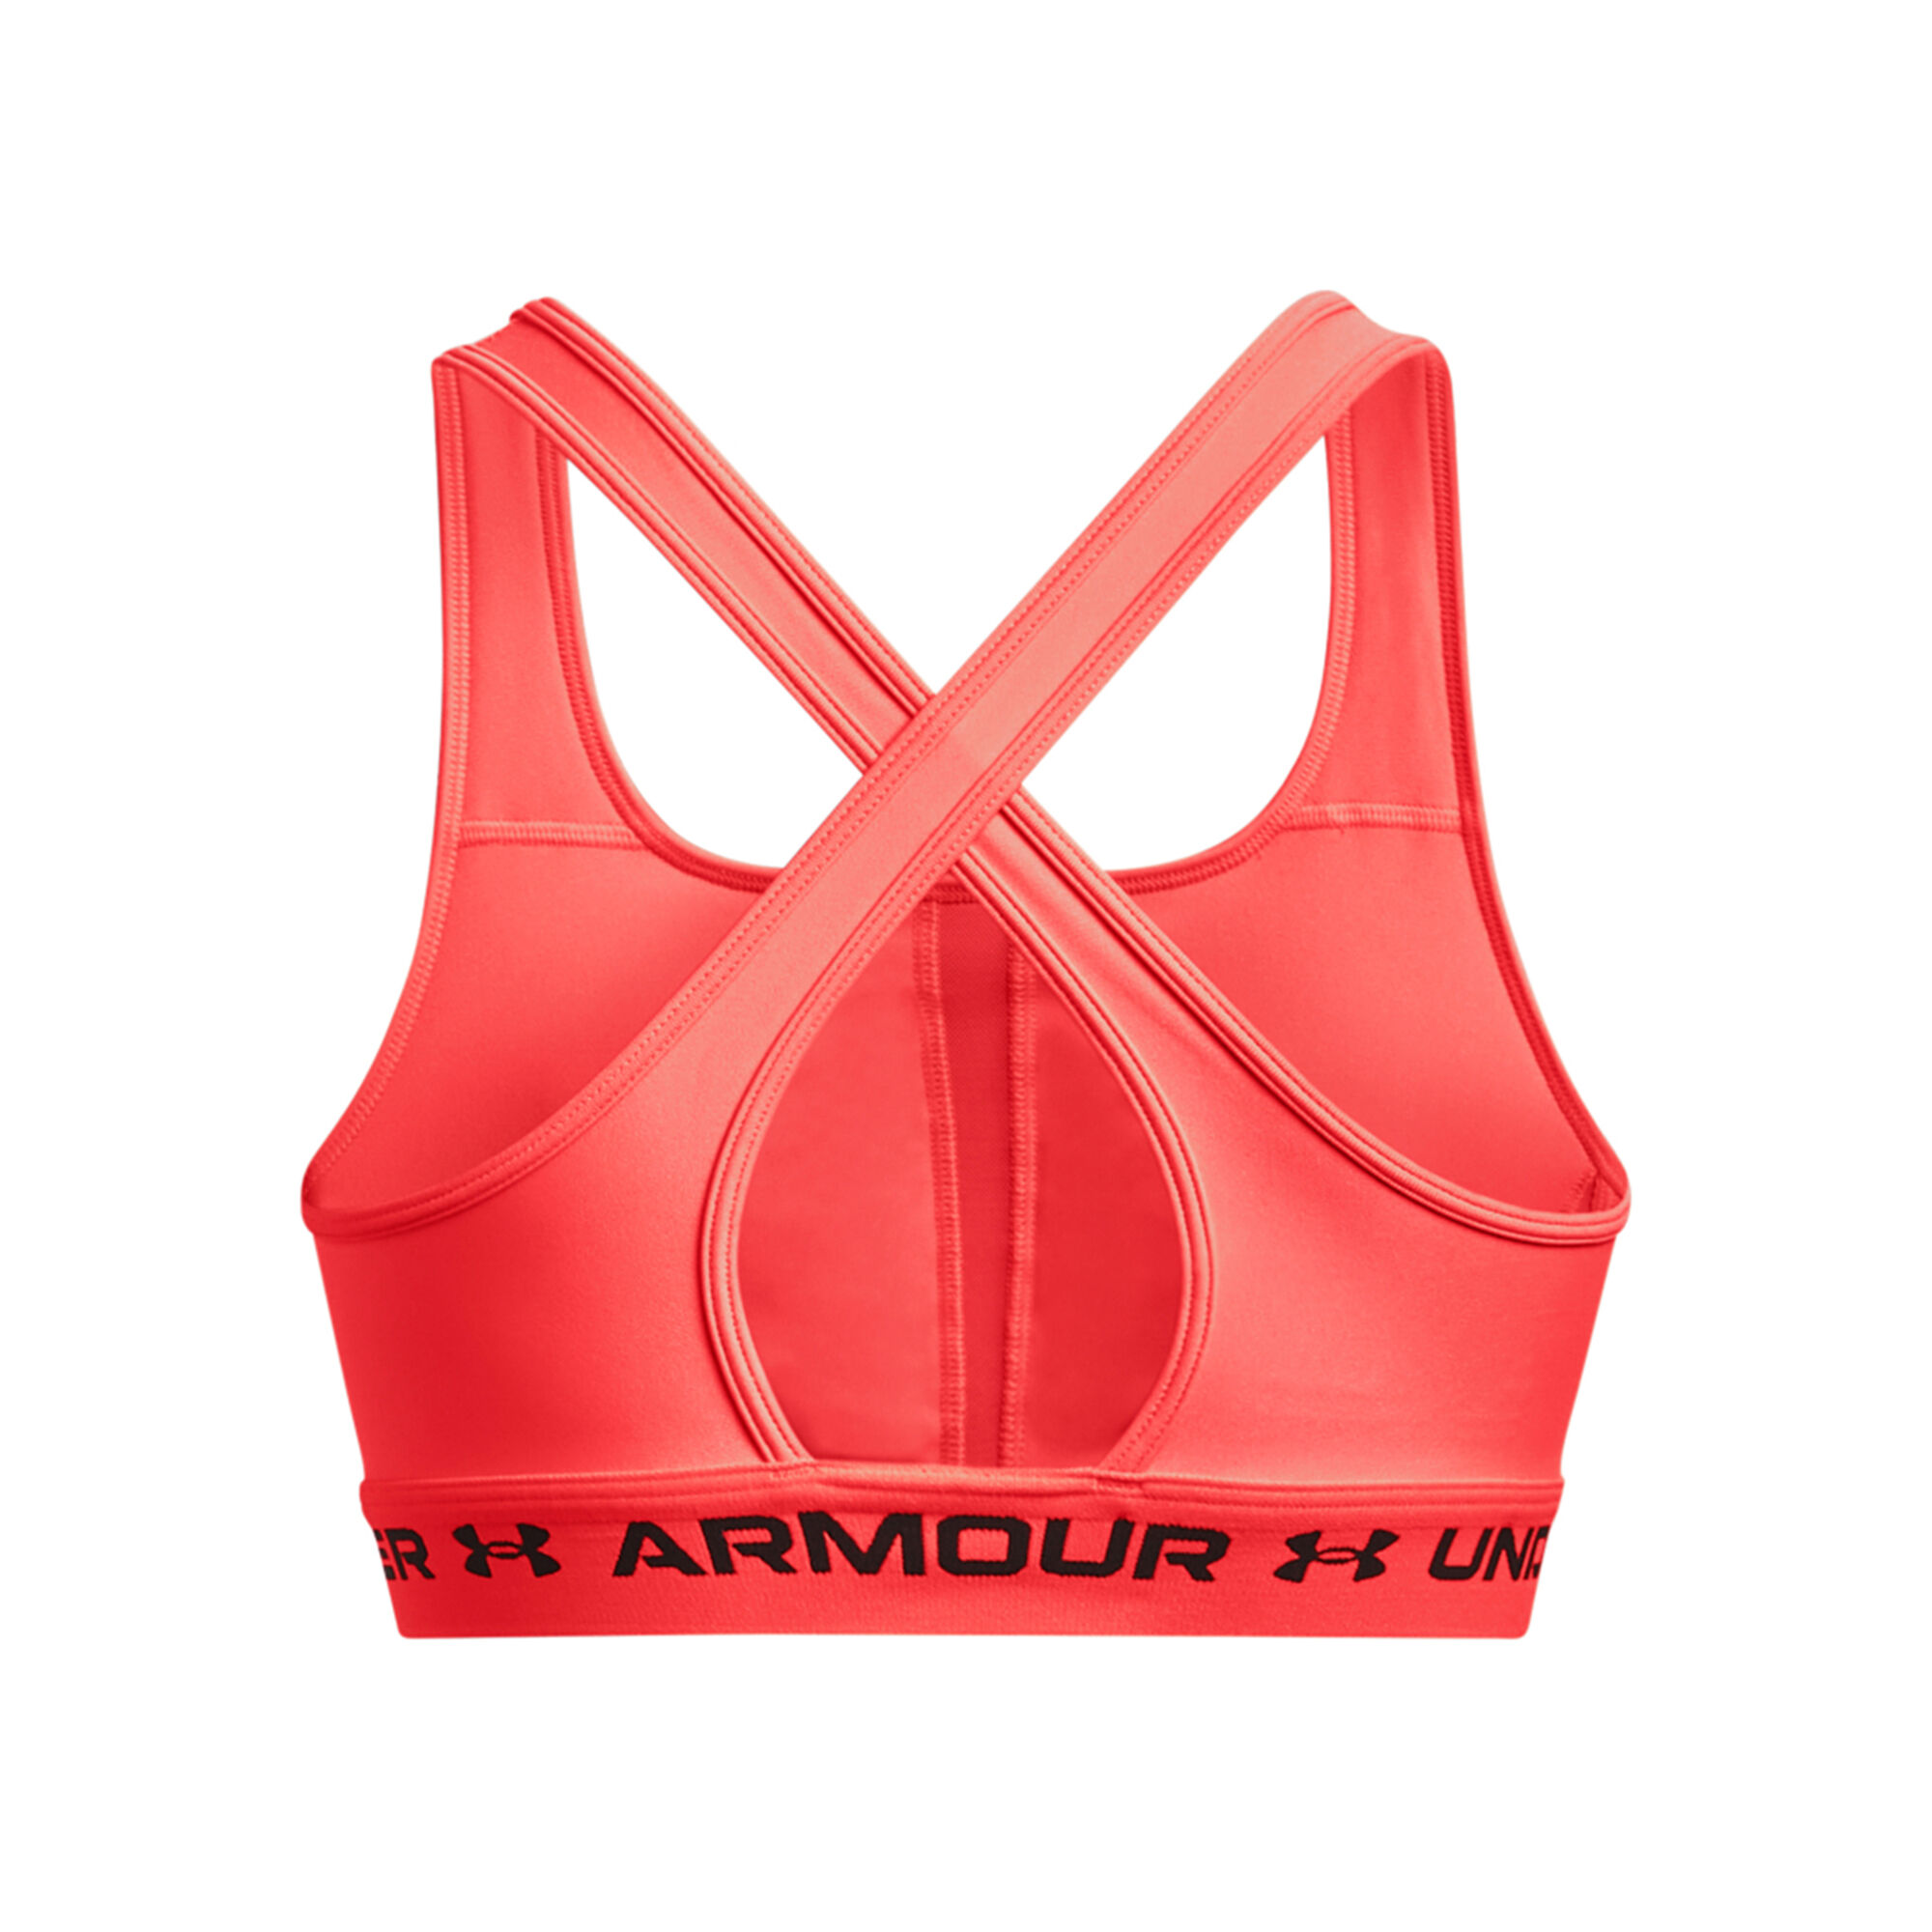 Buy Under Armour Crossback Mid Sports Bras Women Coral, Black online